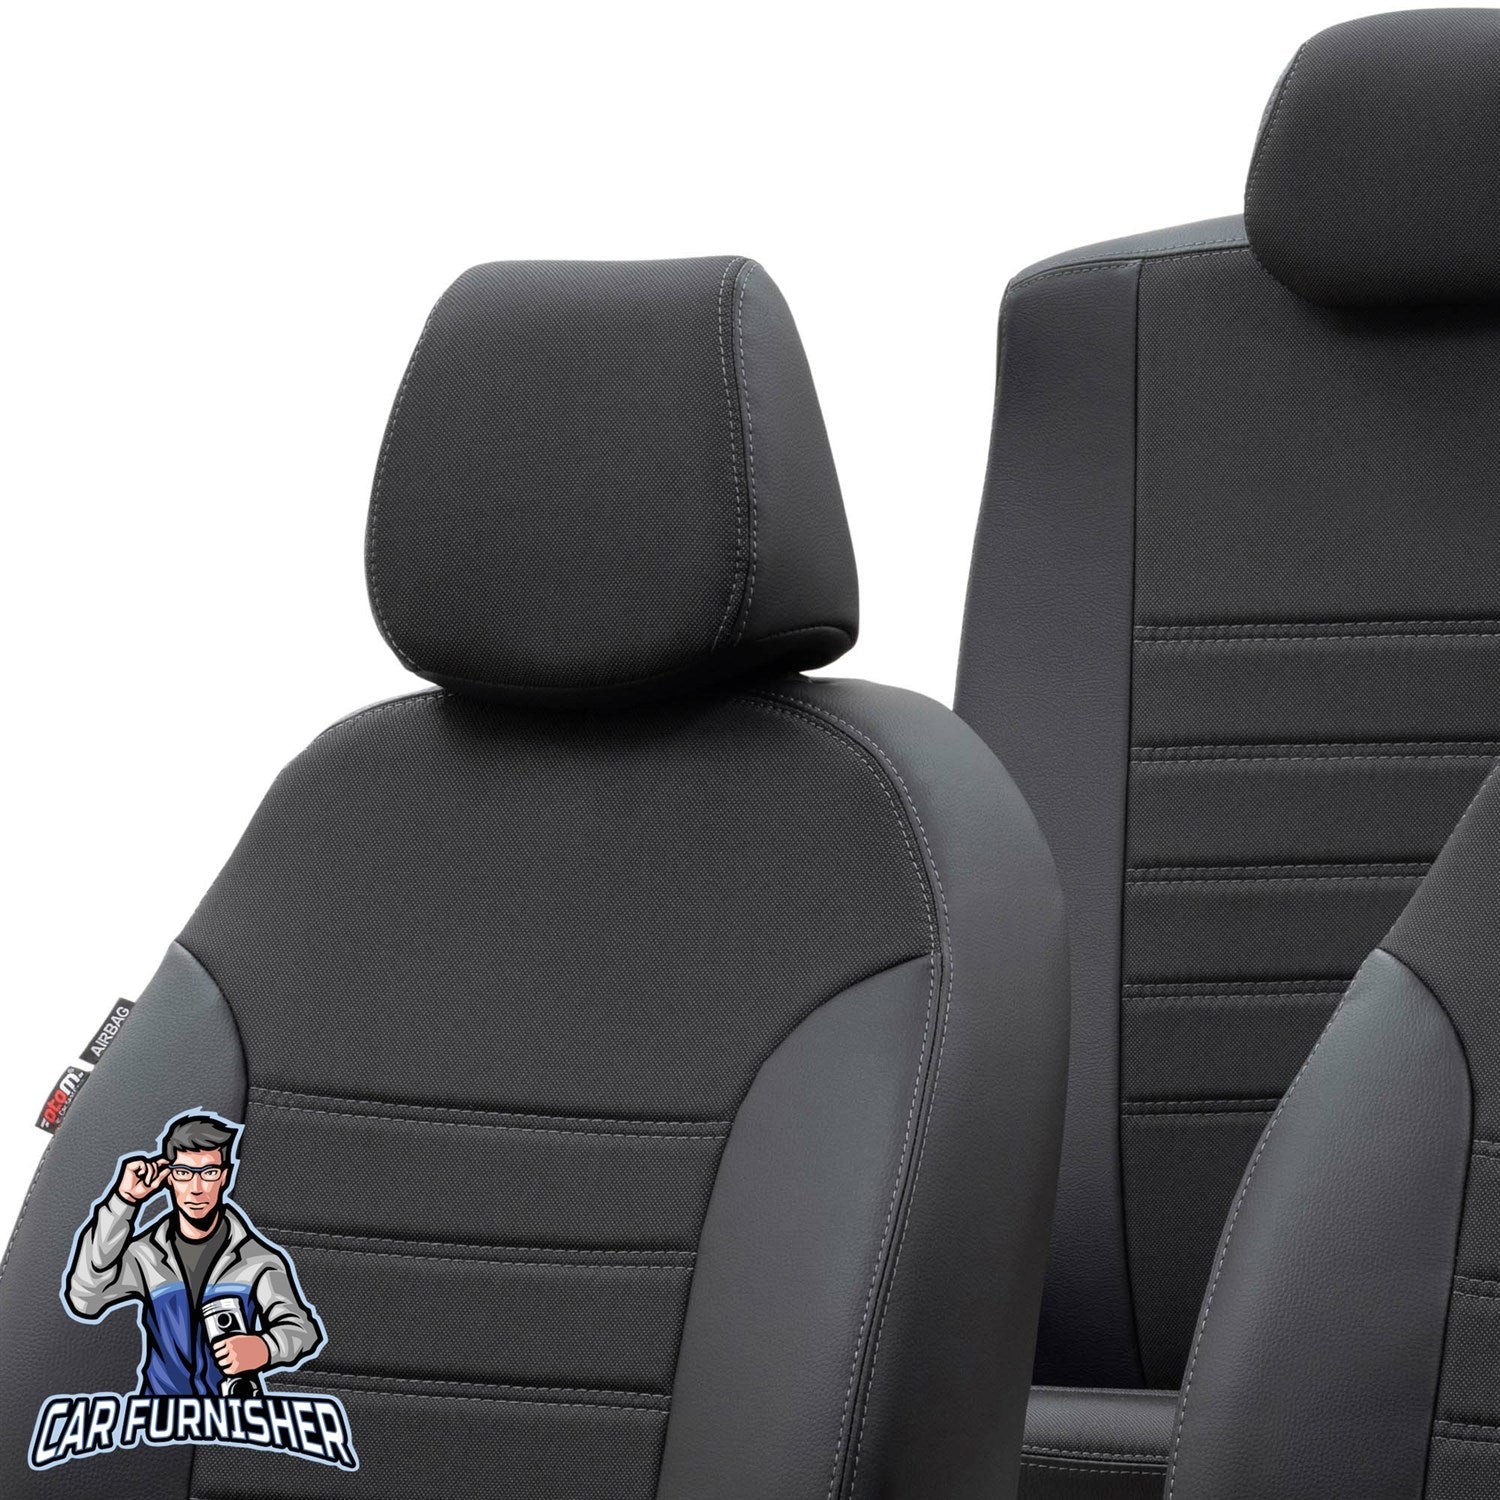 Volvo S90 Seat Cover Paris Leather & Jacquard Design Beige Leather & Jacquard Fabric